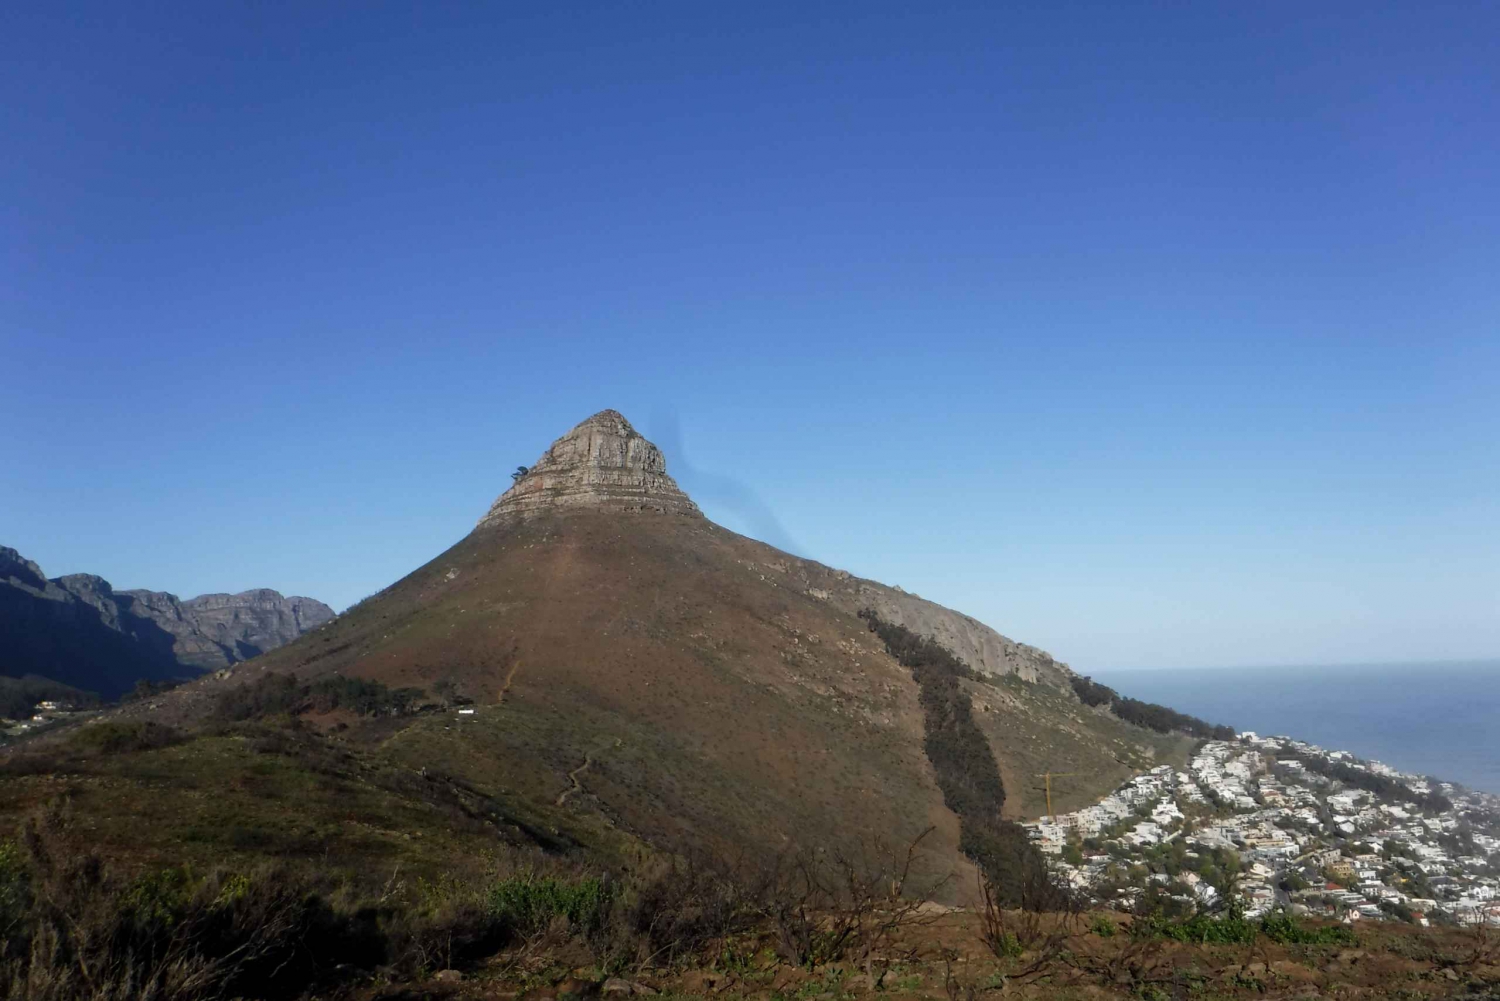 Cape Town: Lion's Head and Signal Hill Morning Trail Run